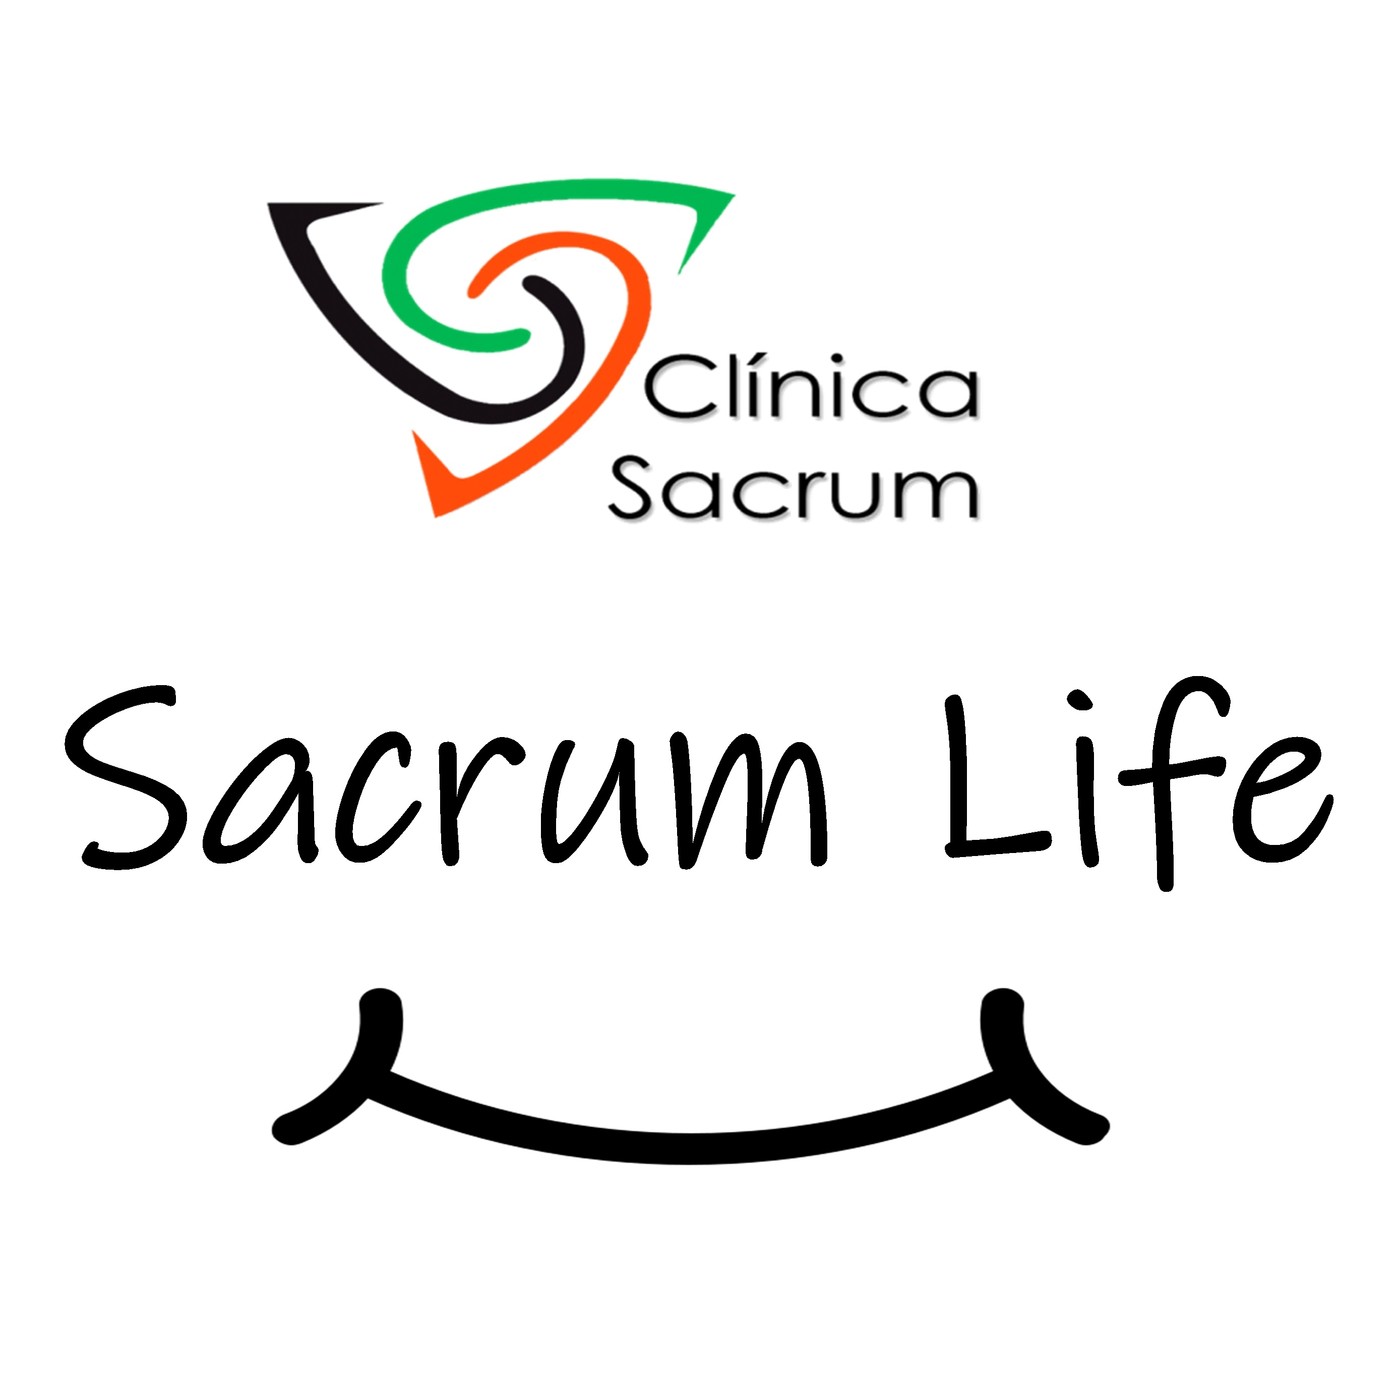 Sacrum Life